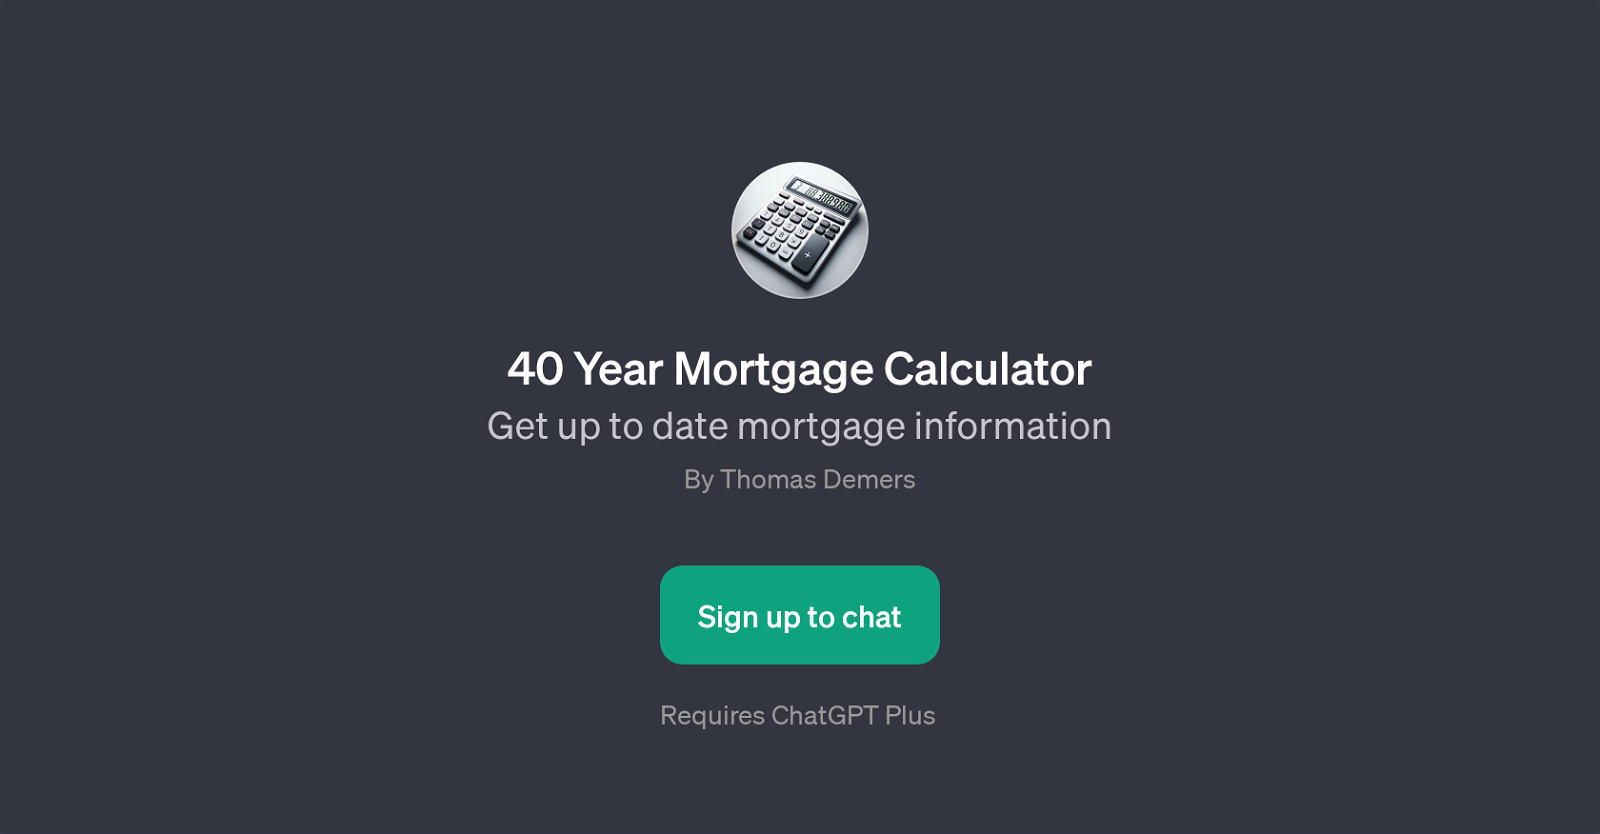 40 Year Mortgage Calculator website